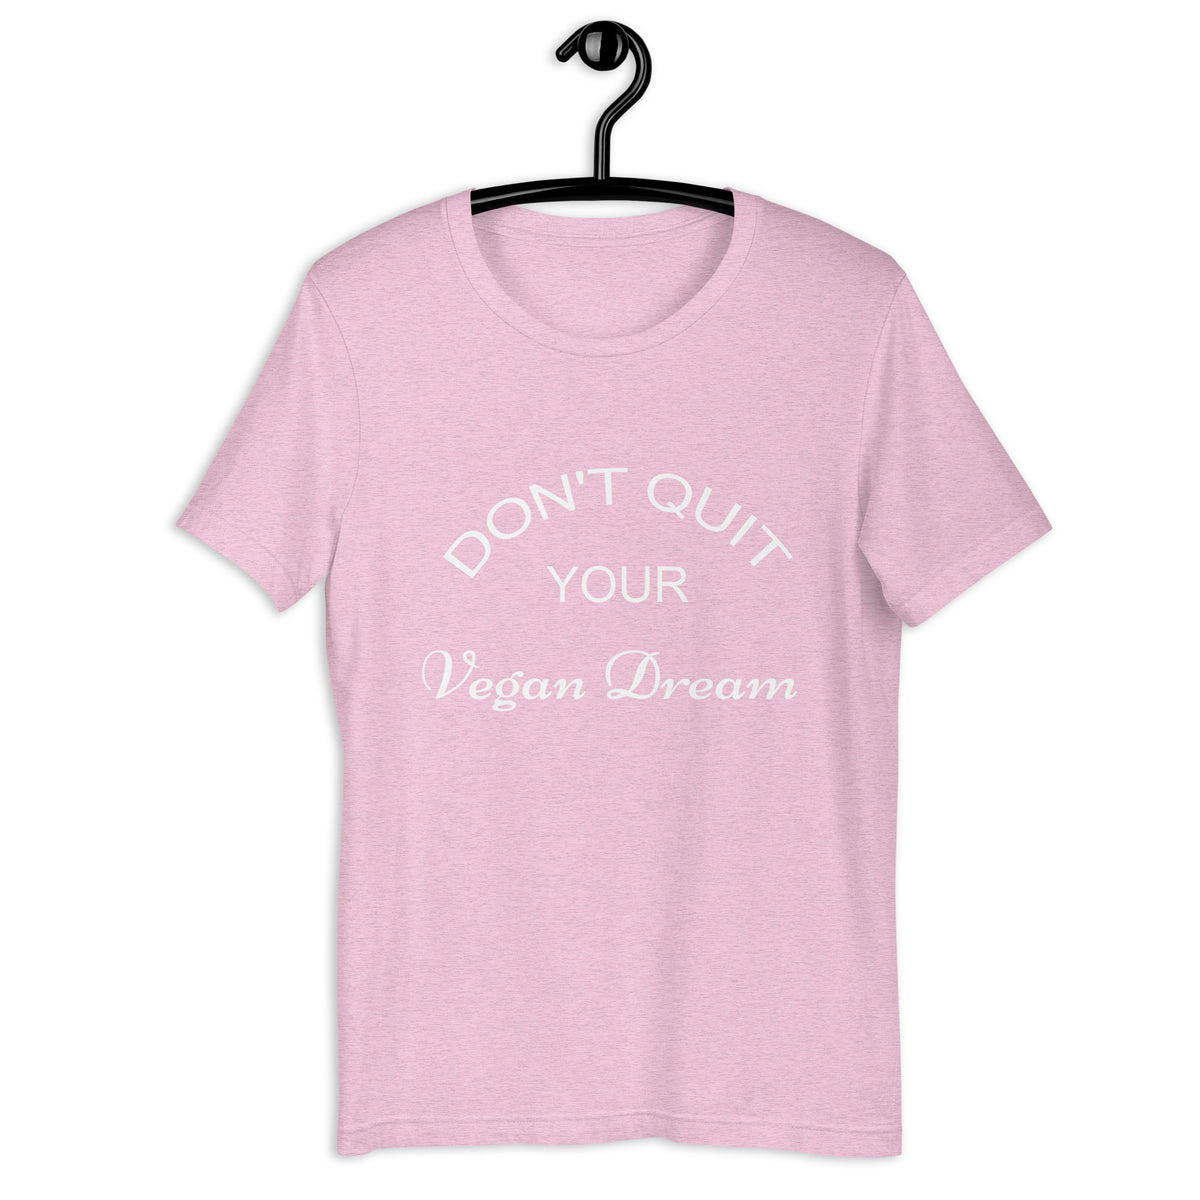 DON'T QUIT YOUR VEGAN DREAM Colored t-shirt